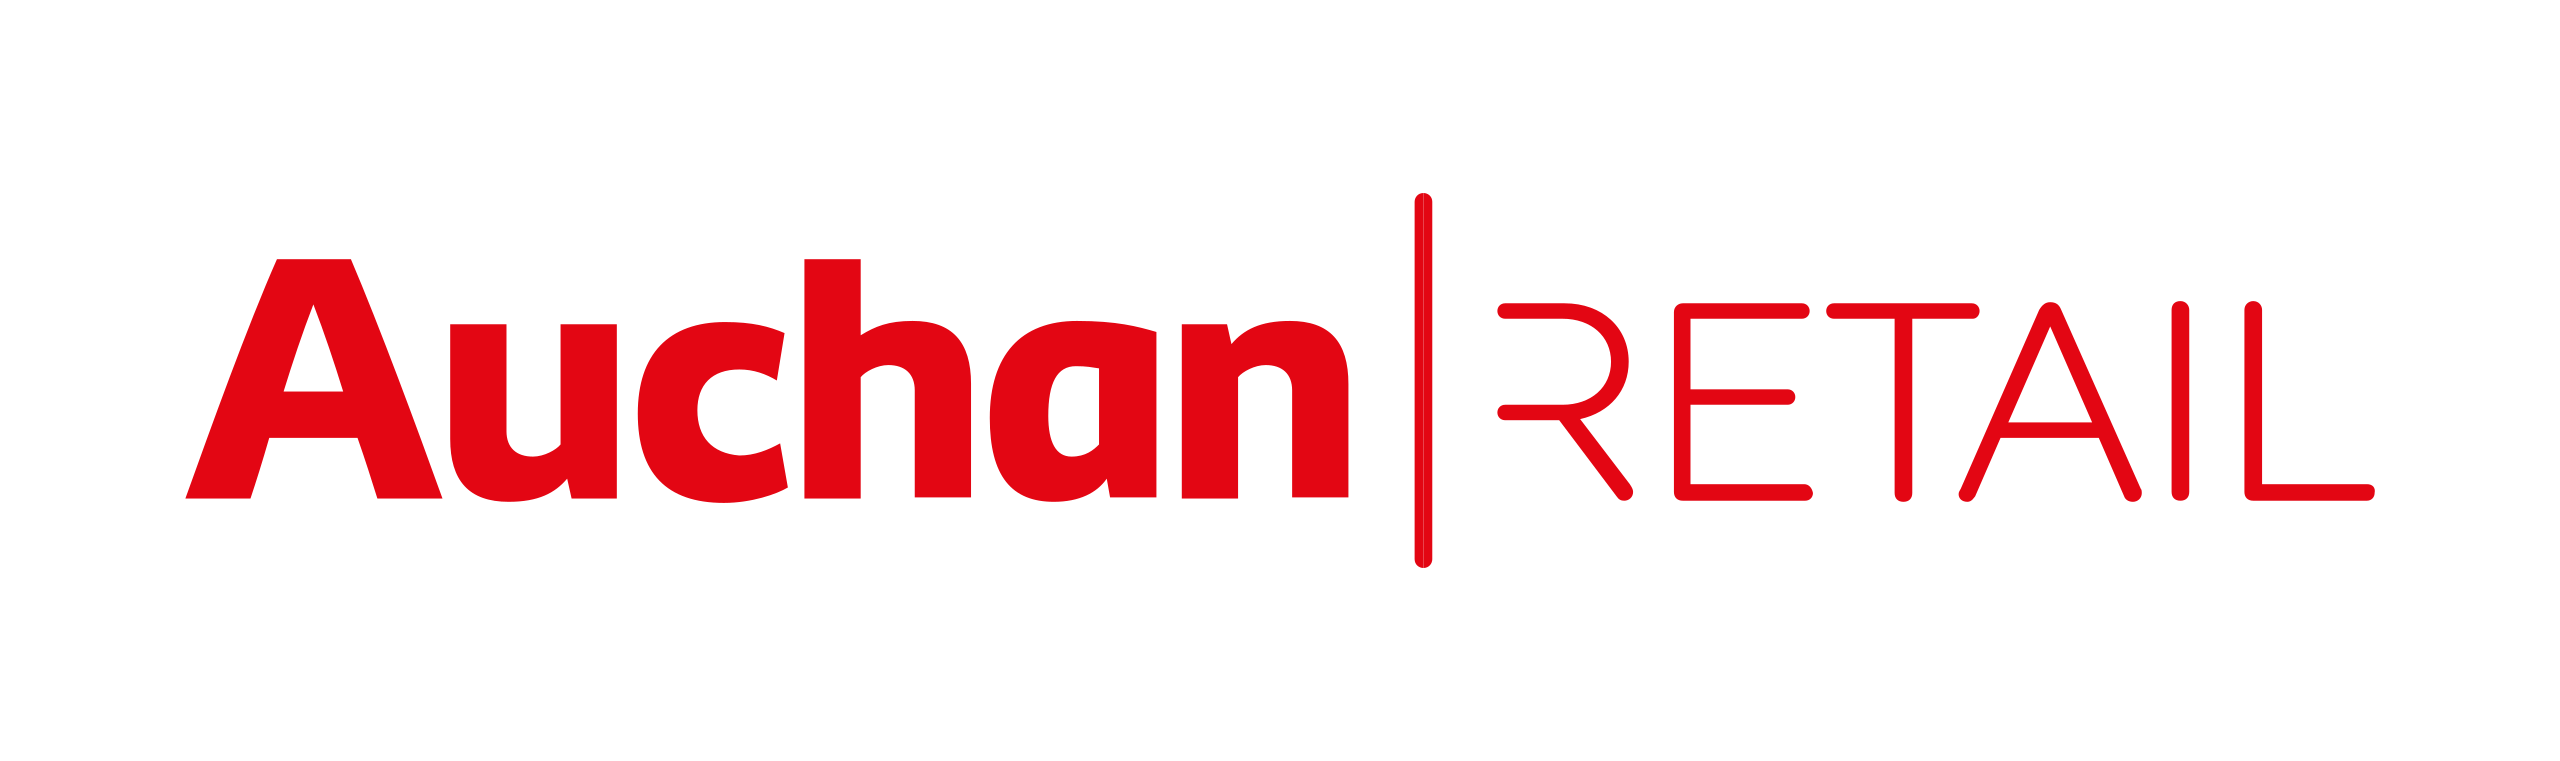 Auchan logo. Ашан логотип. Ашан Ритейл лого. Ашан надпись. ООО Ашан логотип.